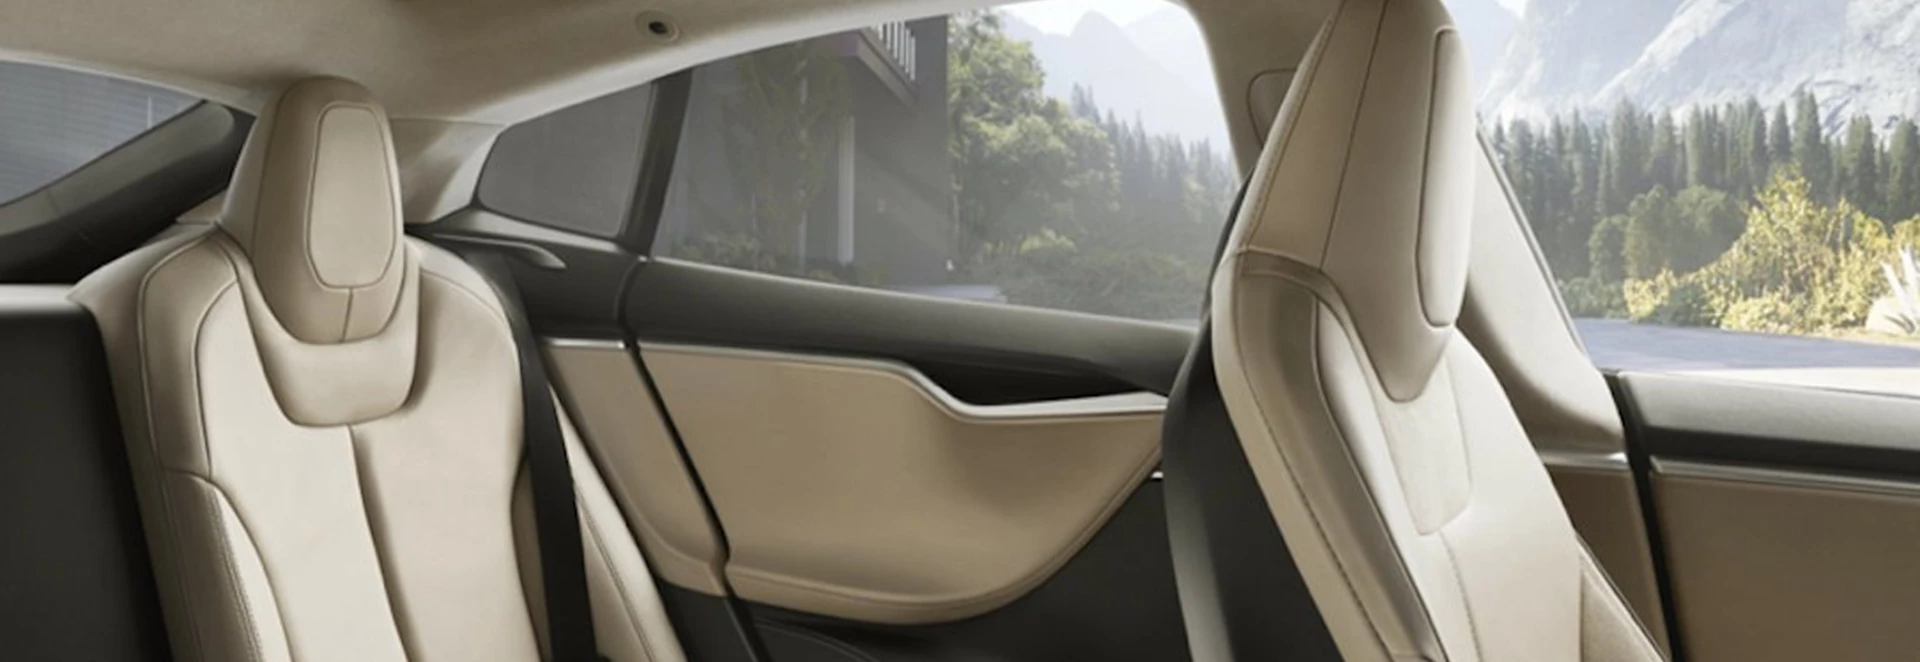 Tesla makes seat option vegan friendly for future models 